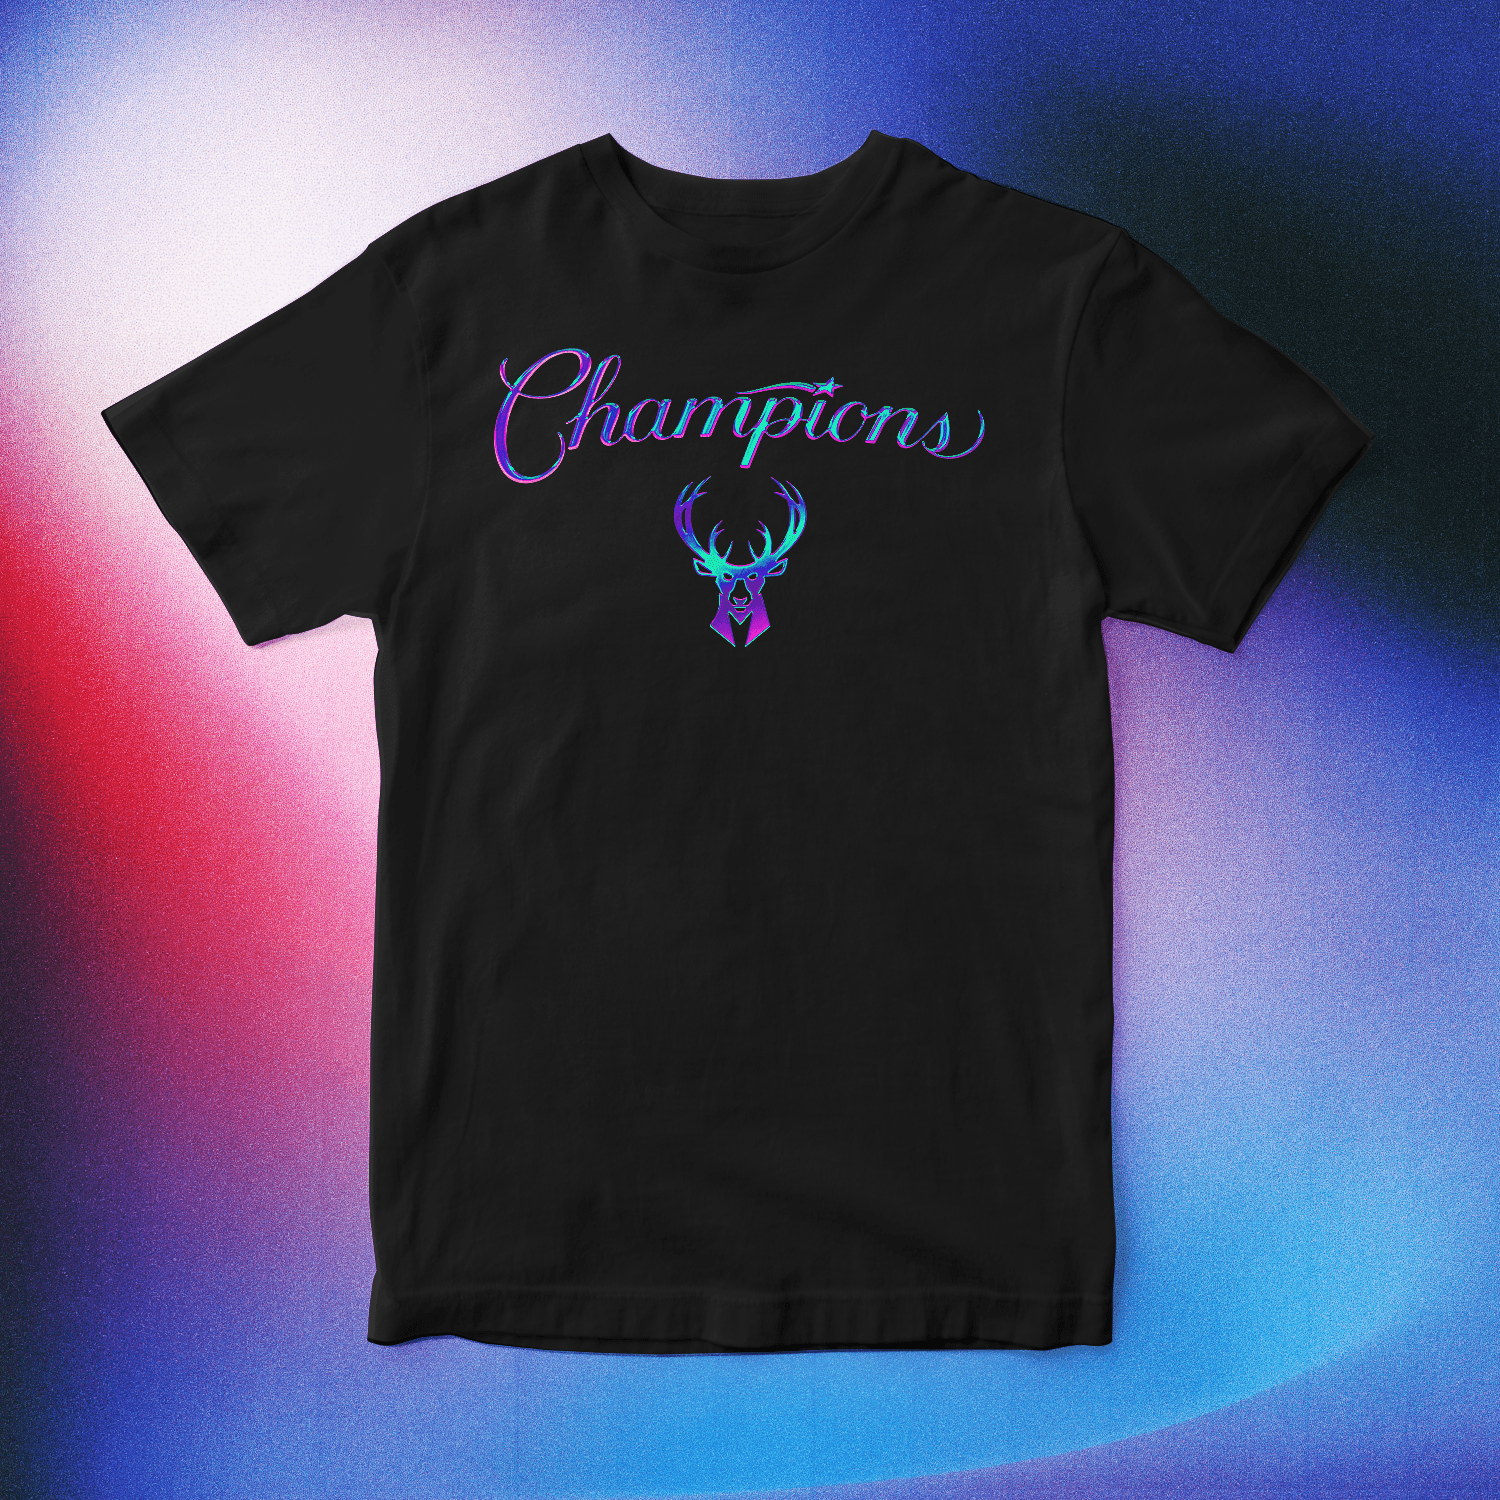 Bucks Champions - Chrome T-Shirt